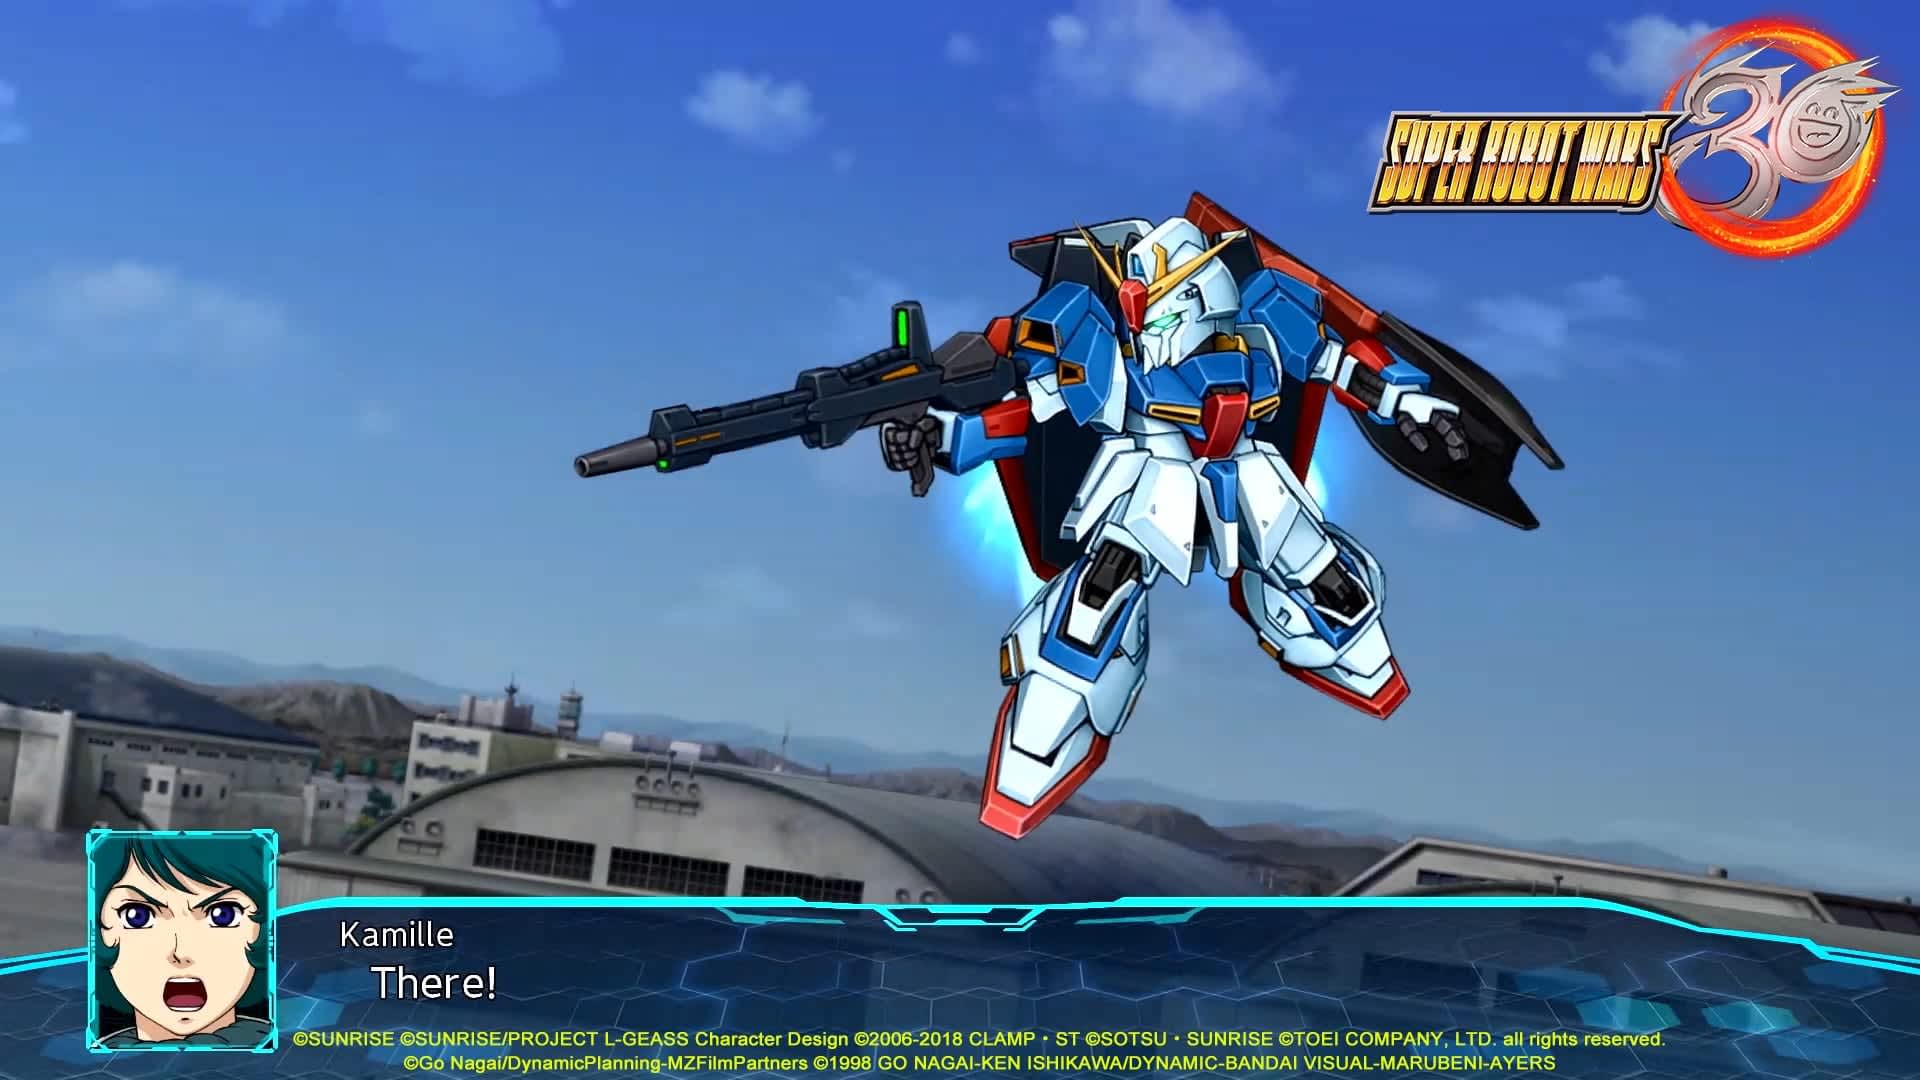 SUPER ROBOT WAR free online game on